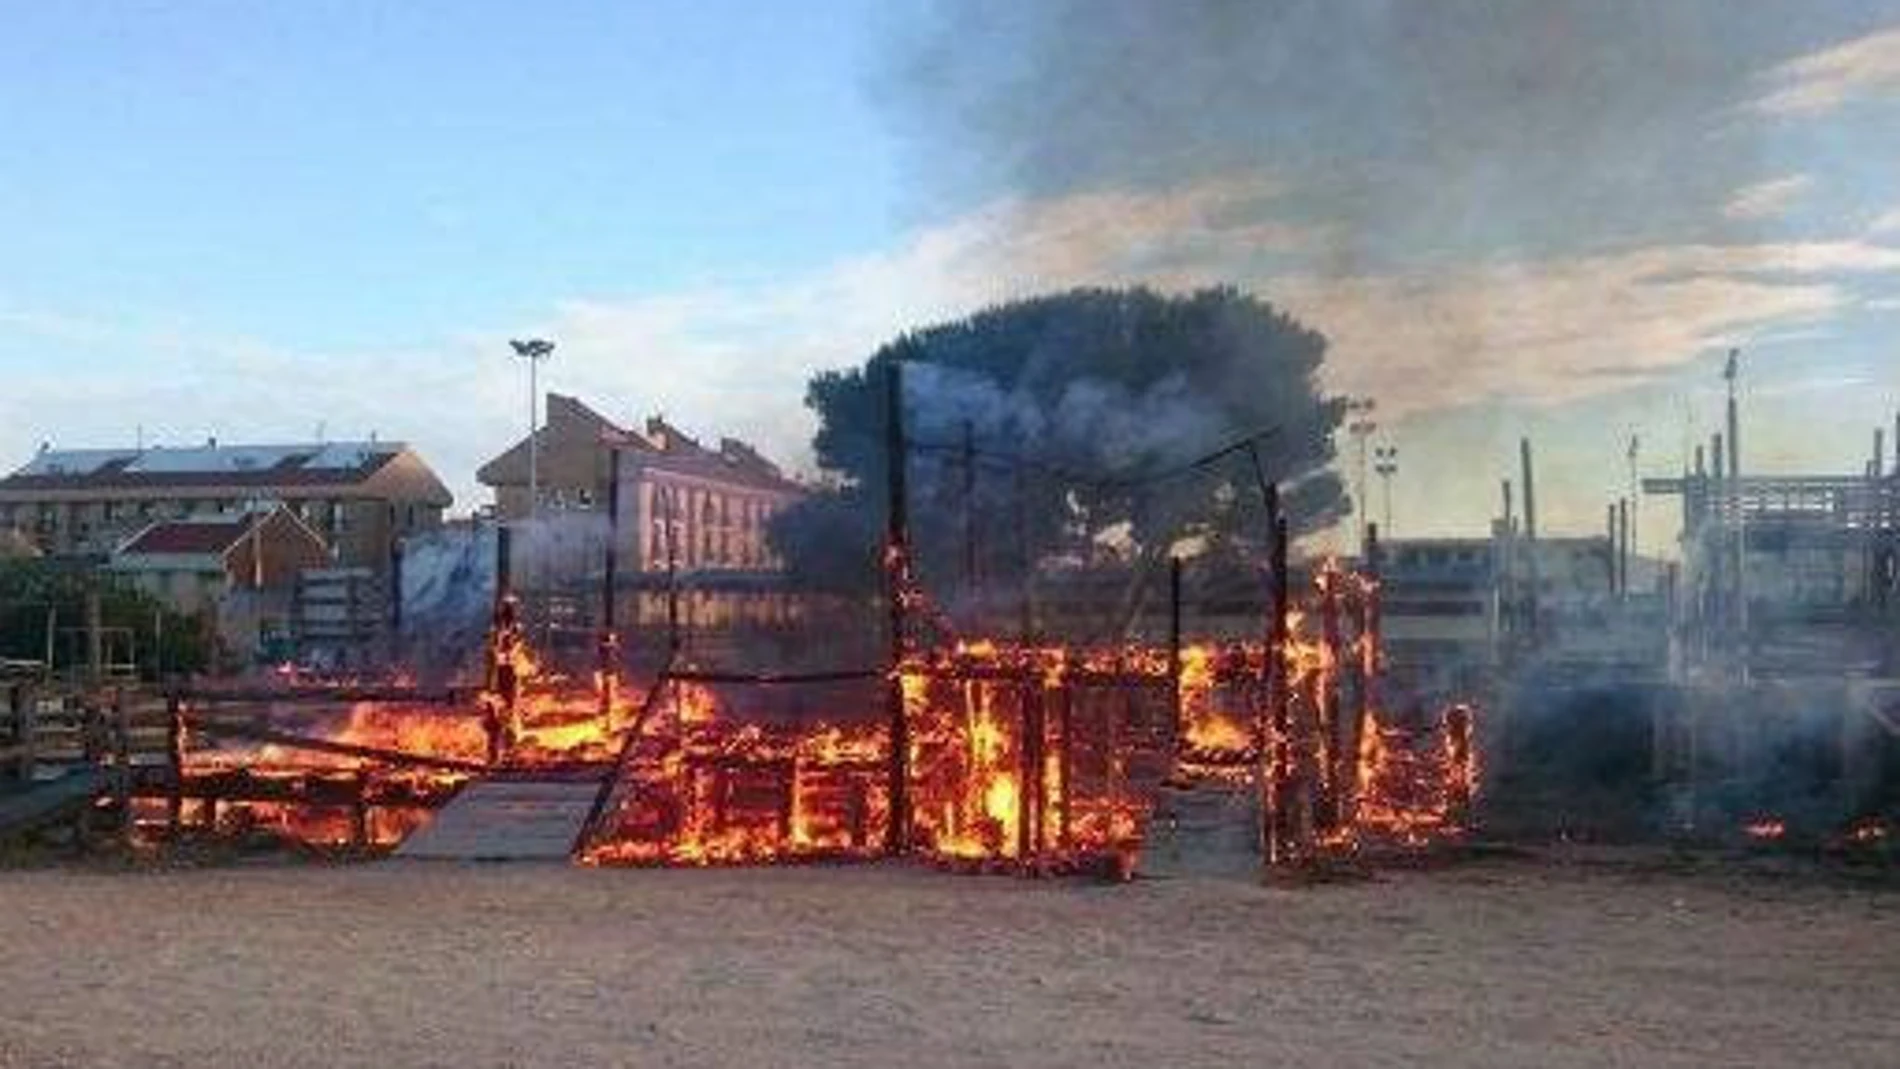 Plaza de toros de Campredó en llamas